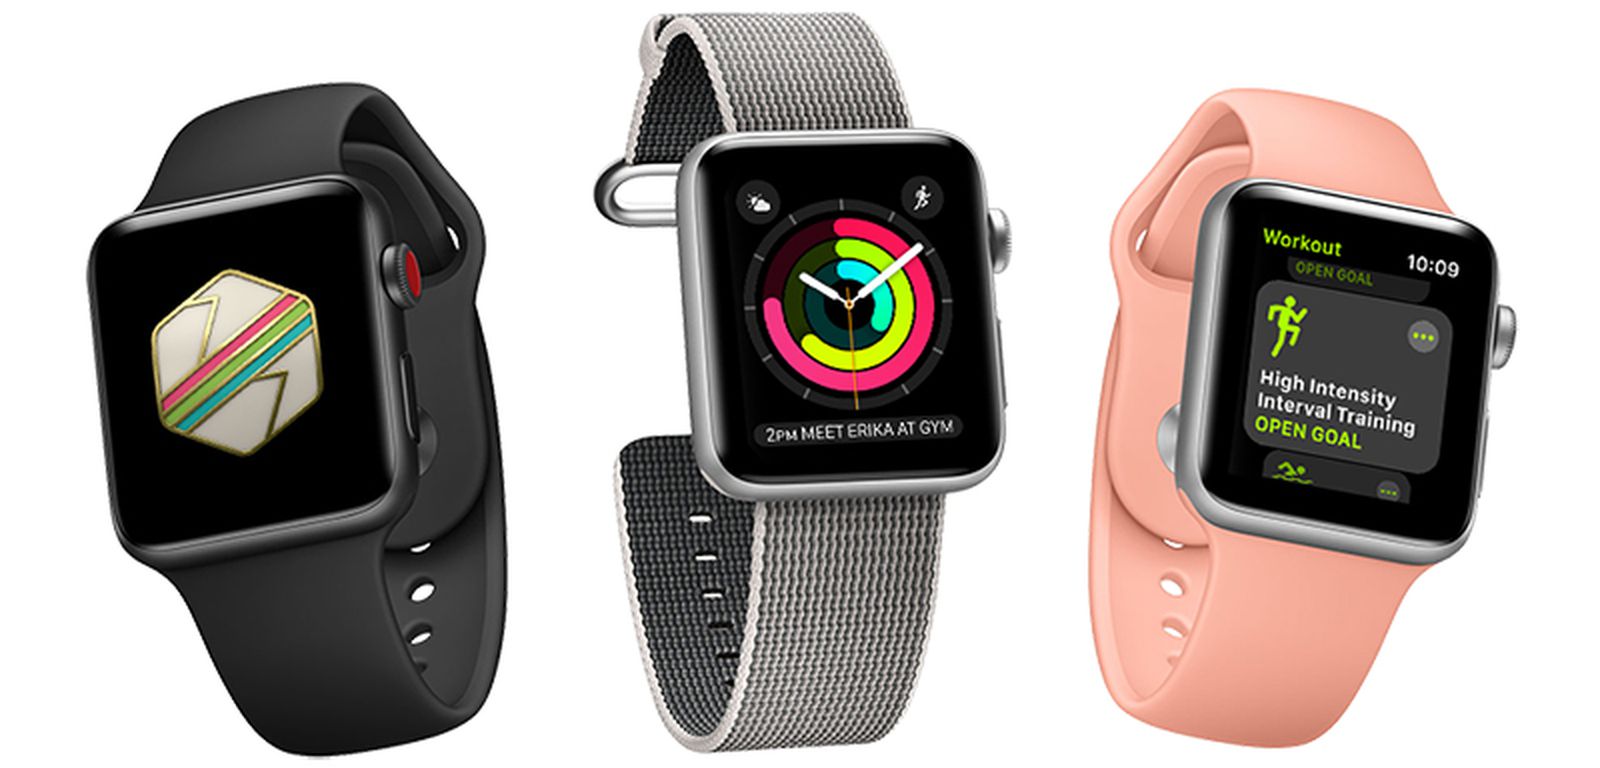 Deals Spotlight: Expercom Discounts Cellular Apple Watch Series 3